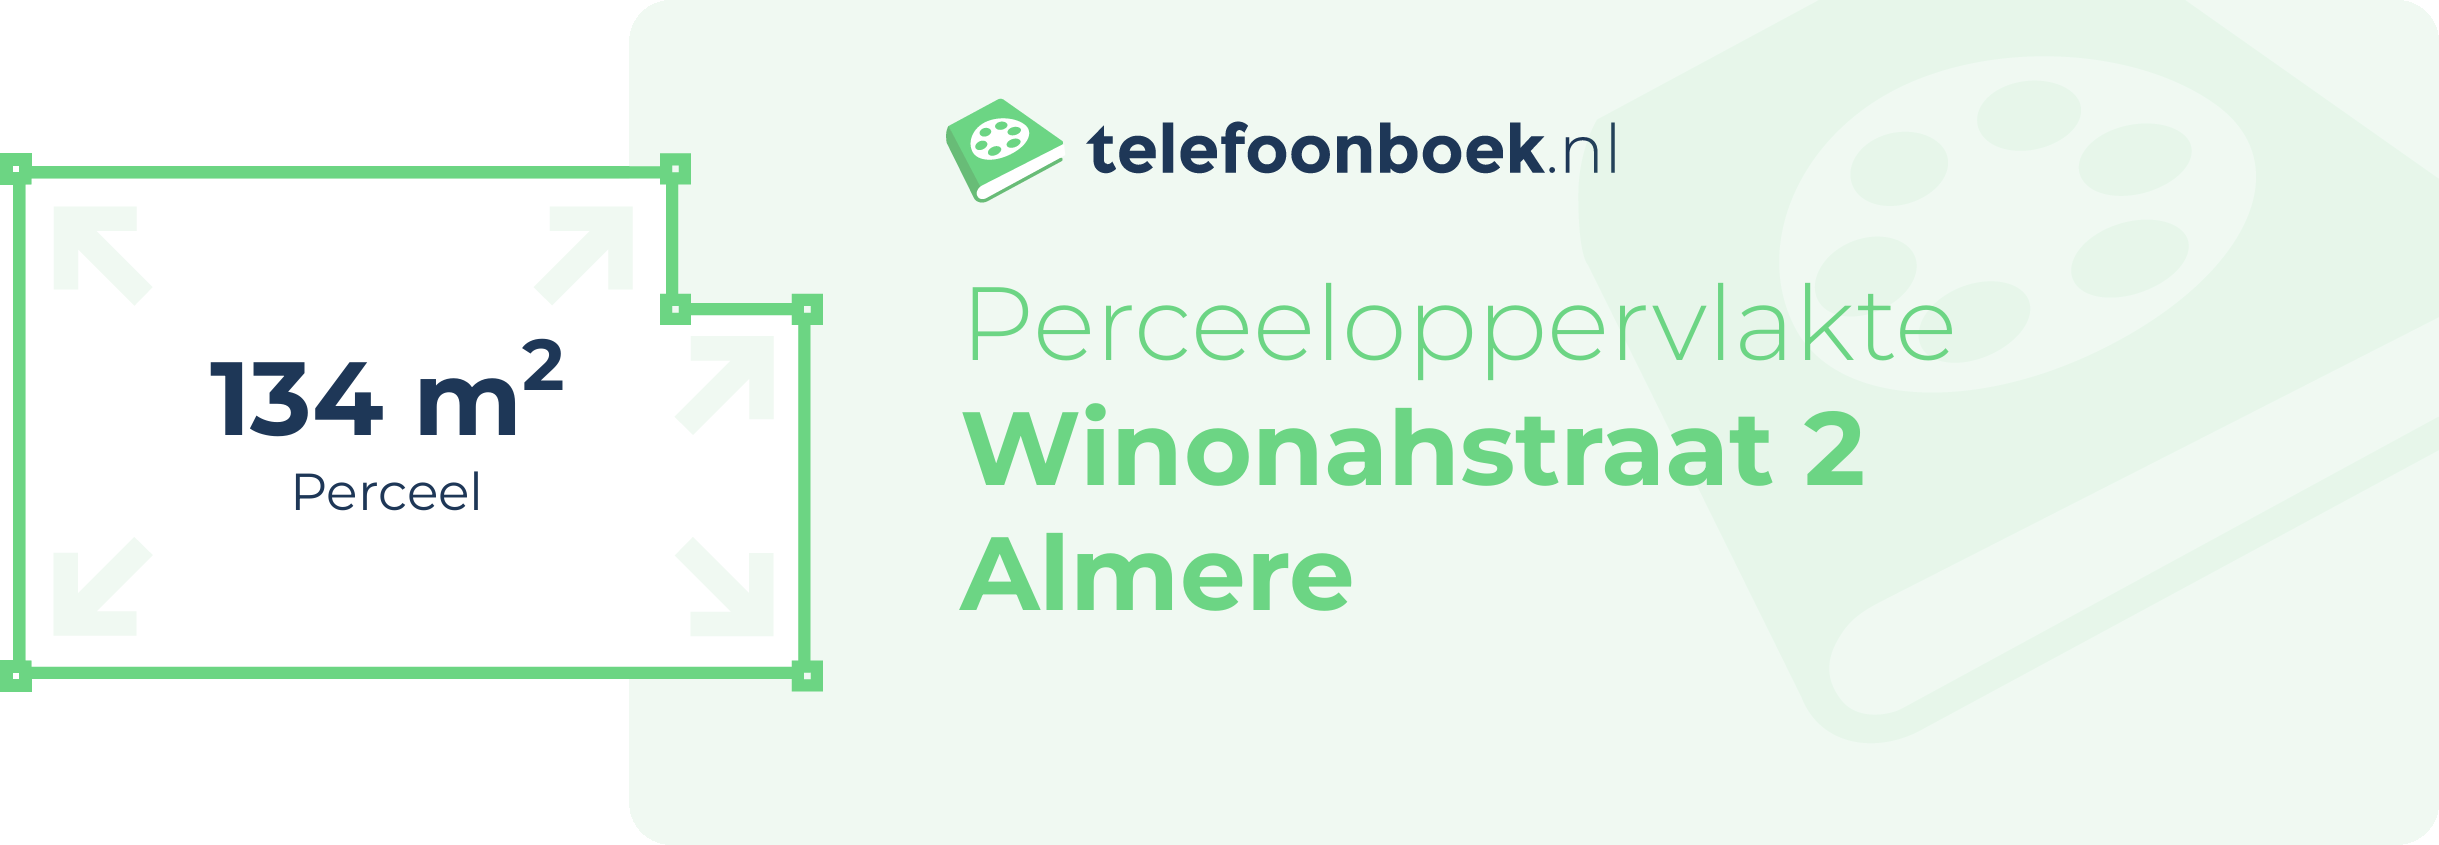 Perceeloppervlakte Winonahstraat 2 Almere